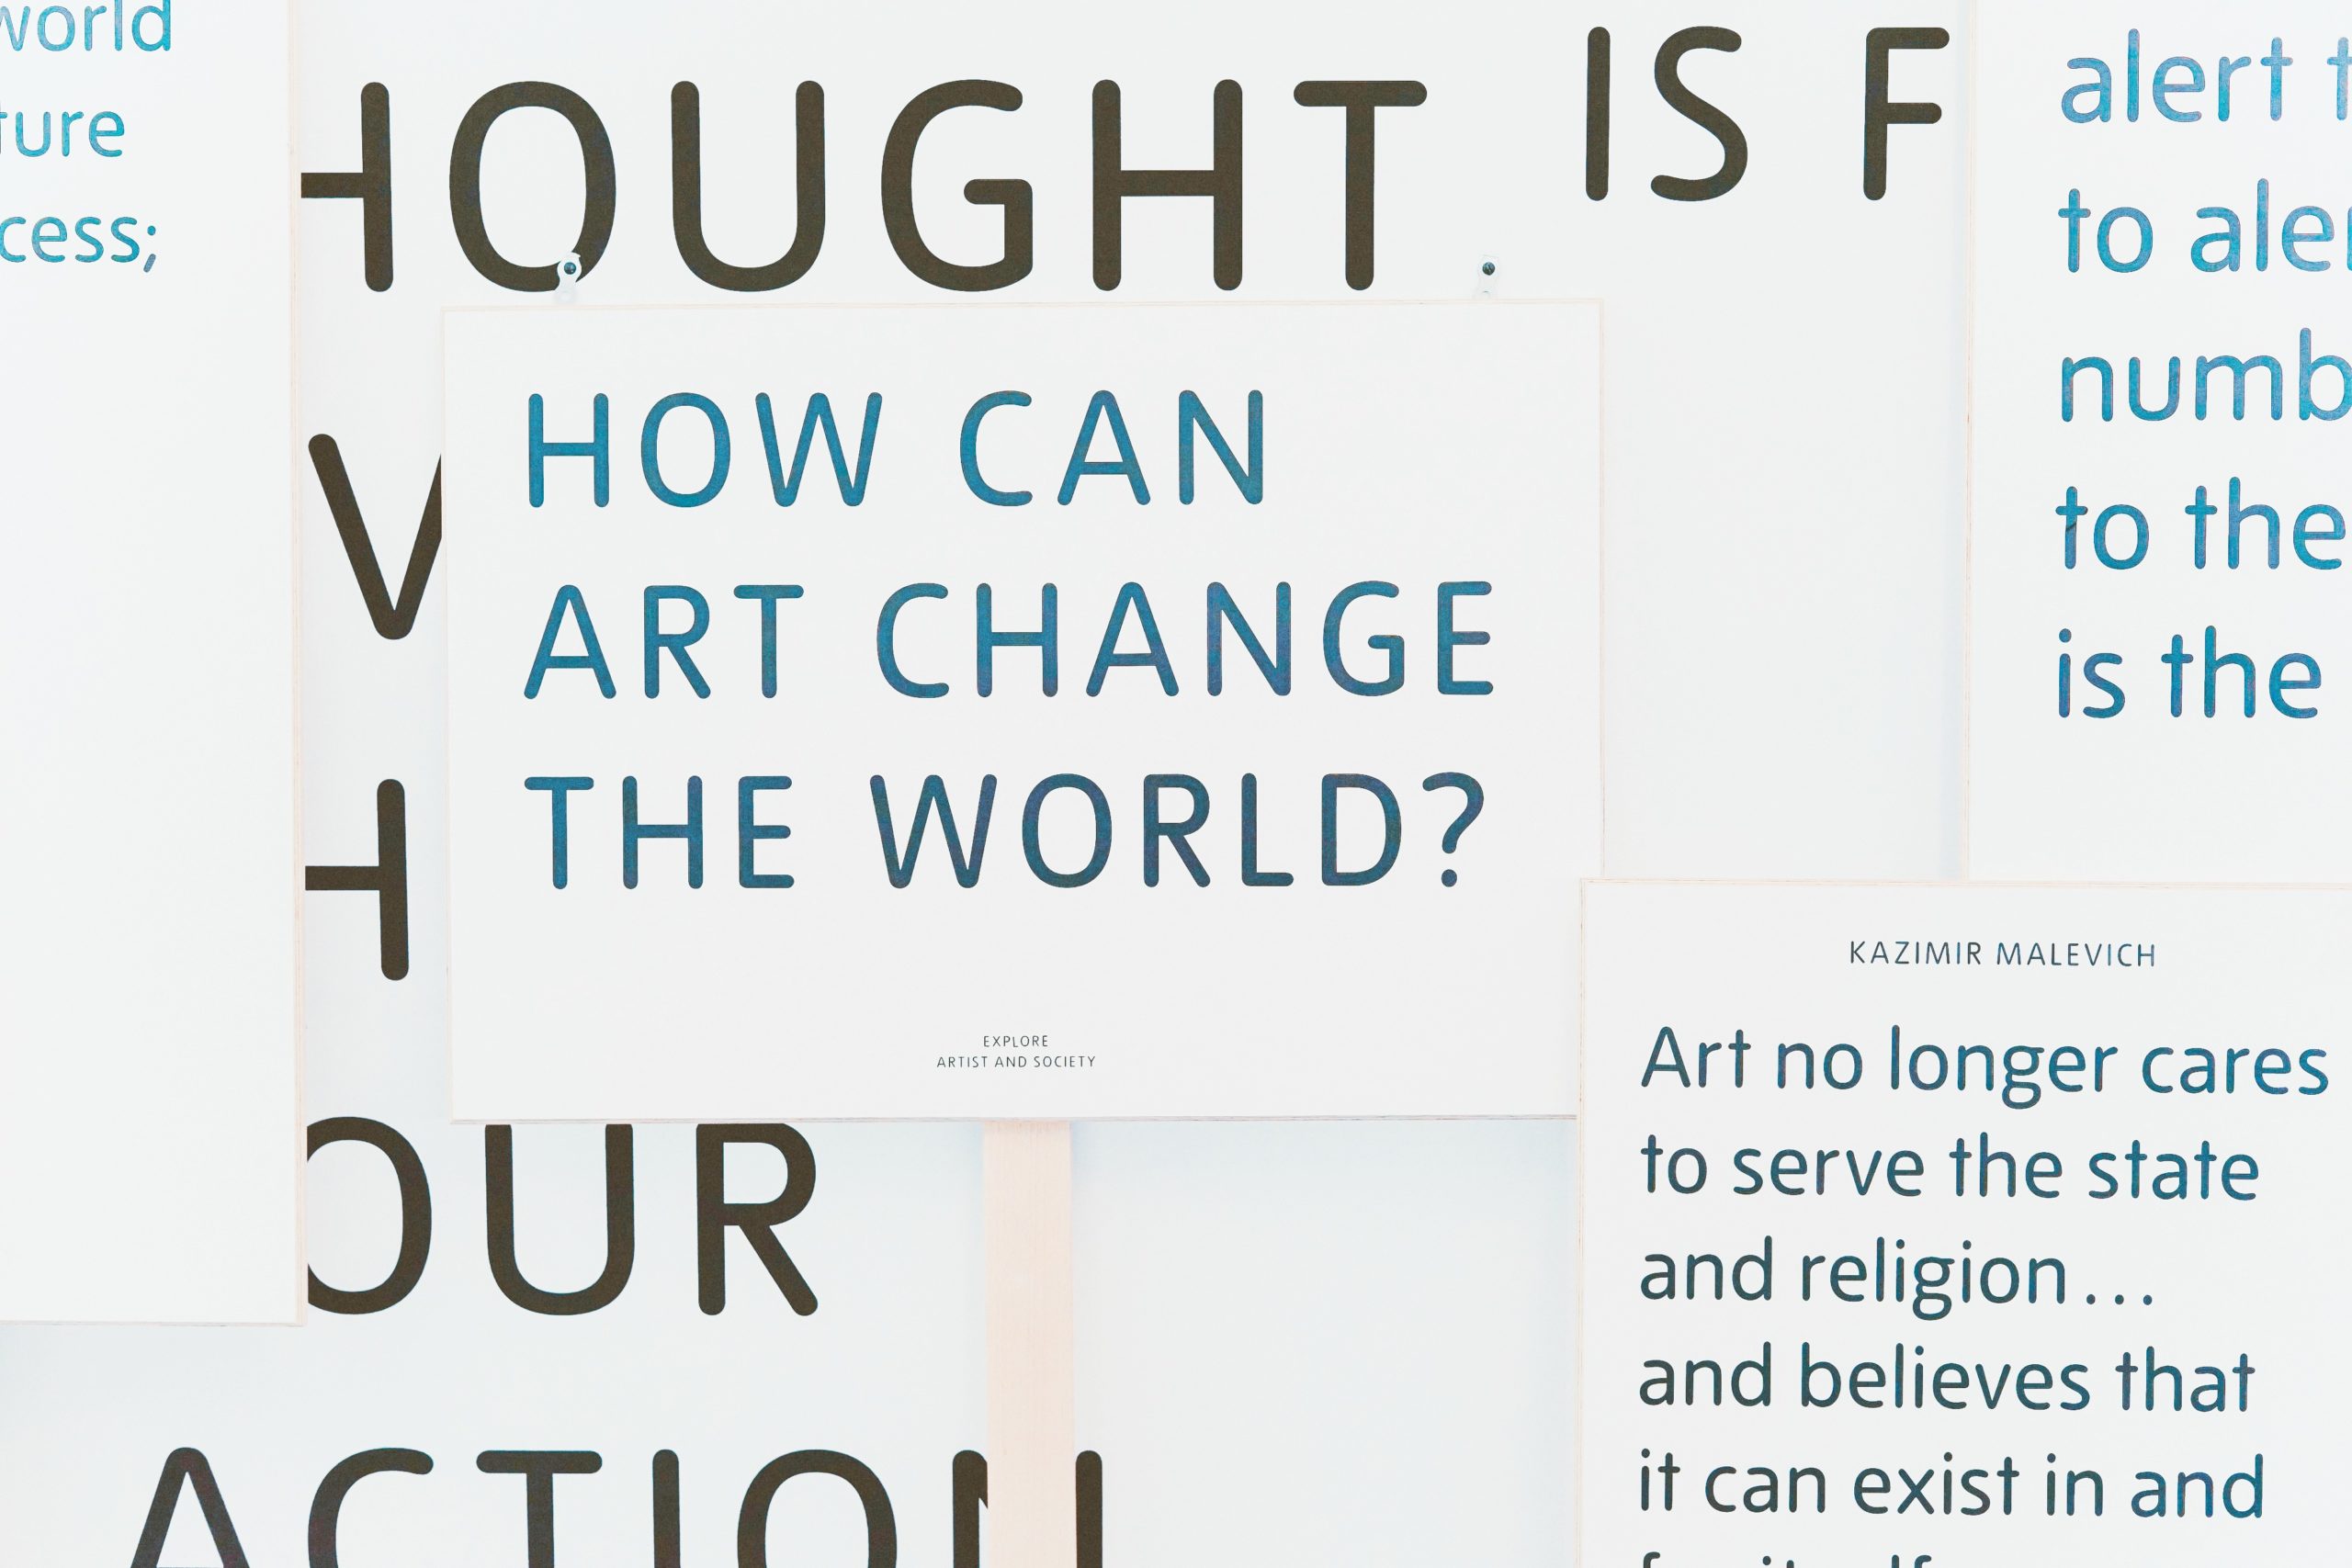 <img src="art.jpg" alt="how art can change the world print"/> 